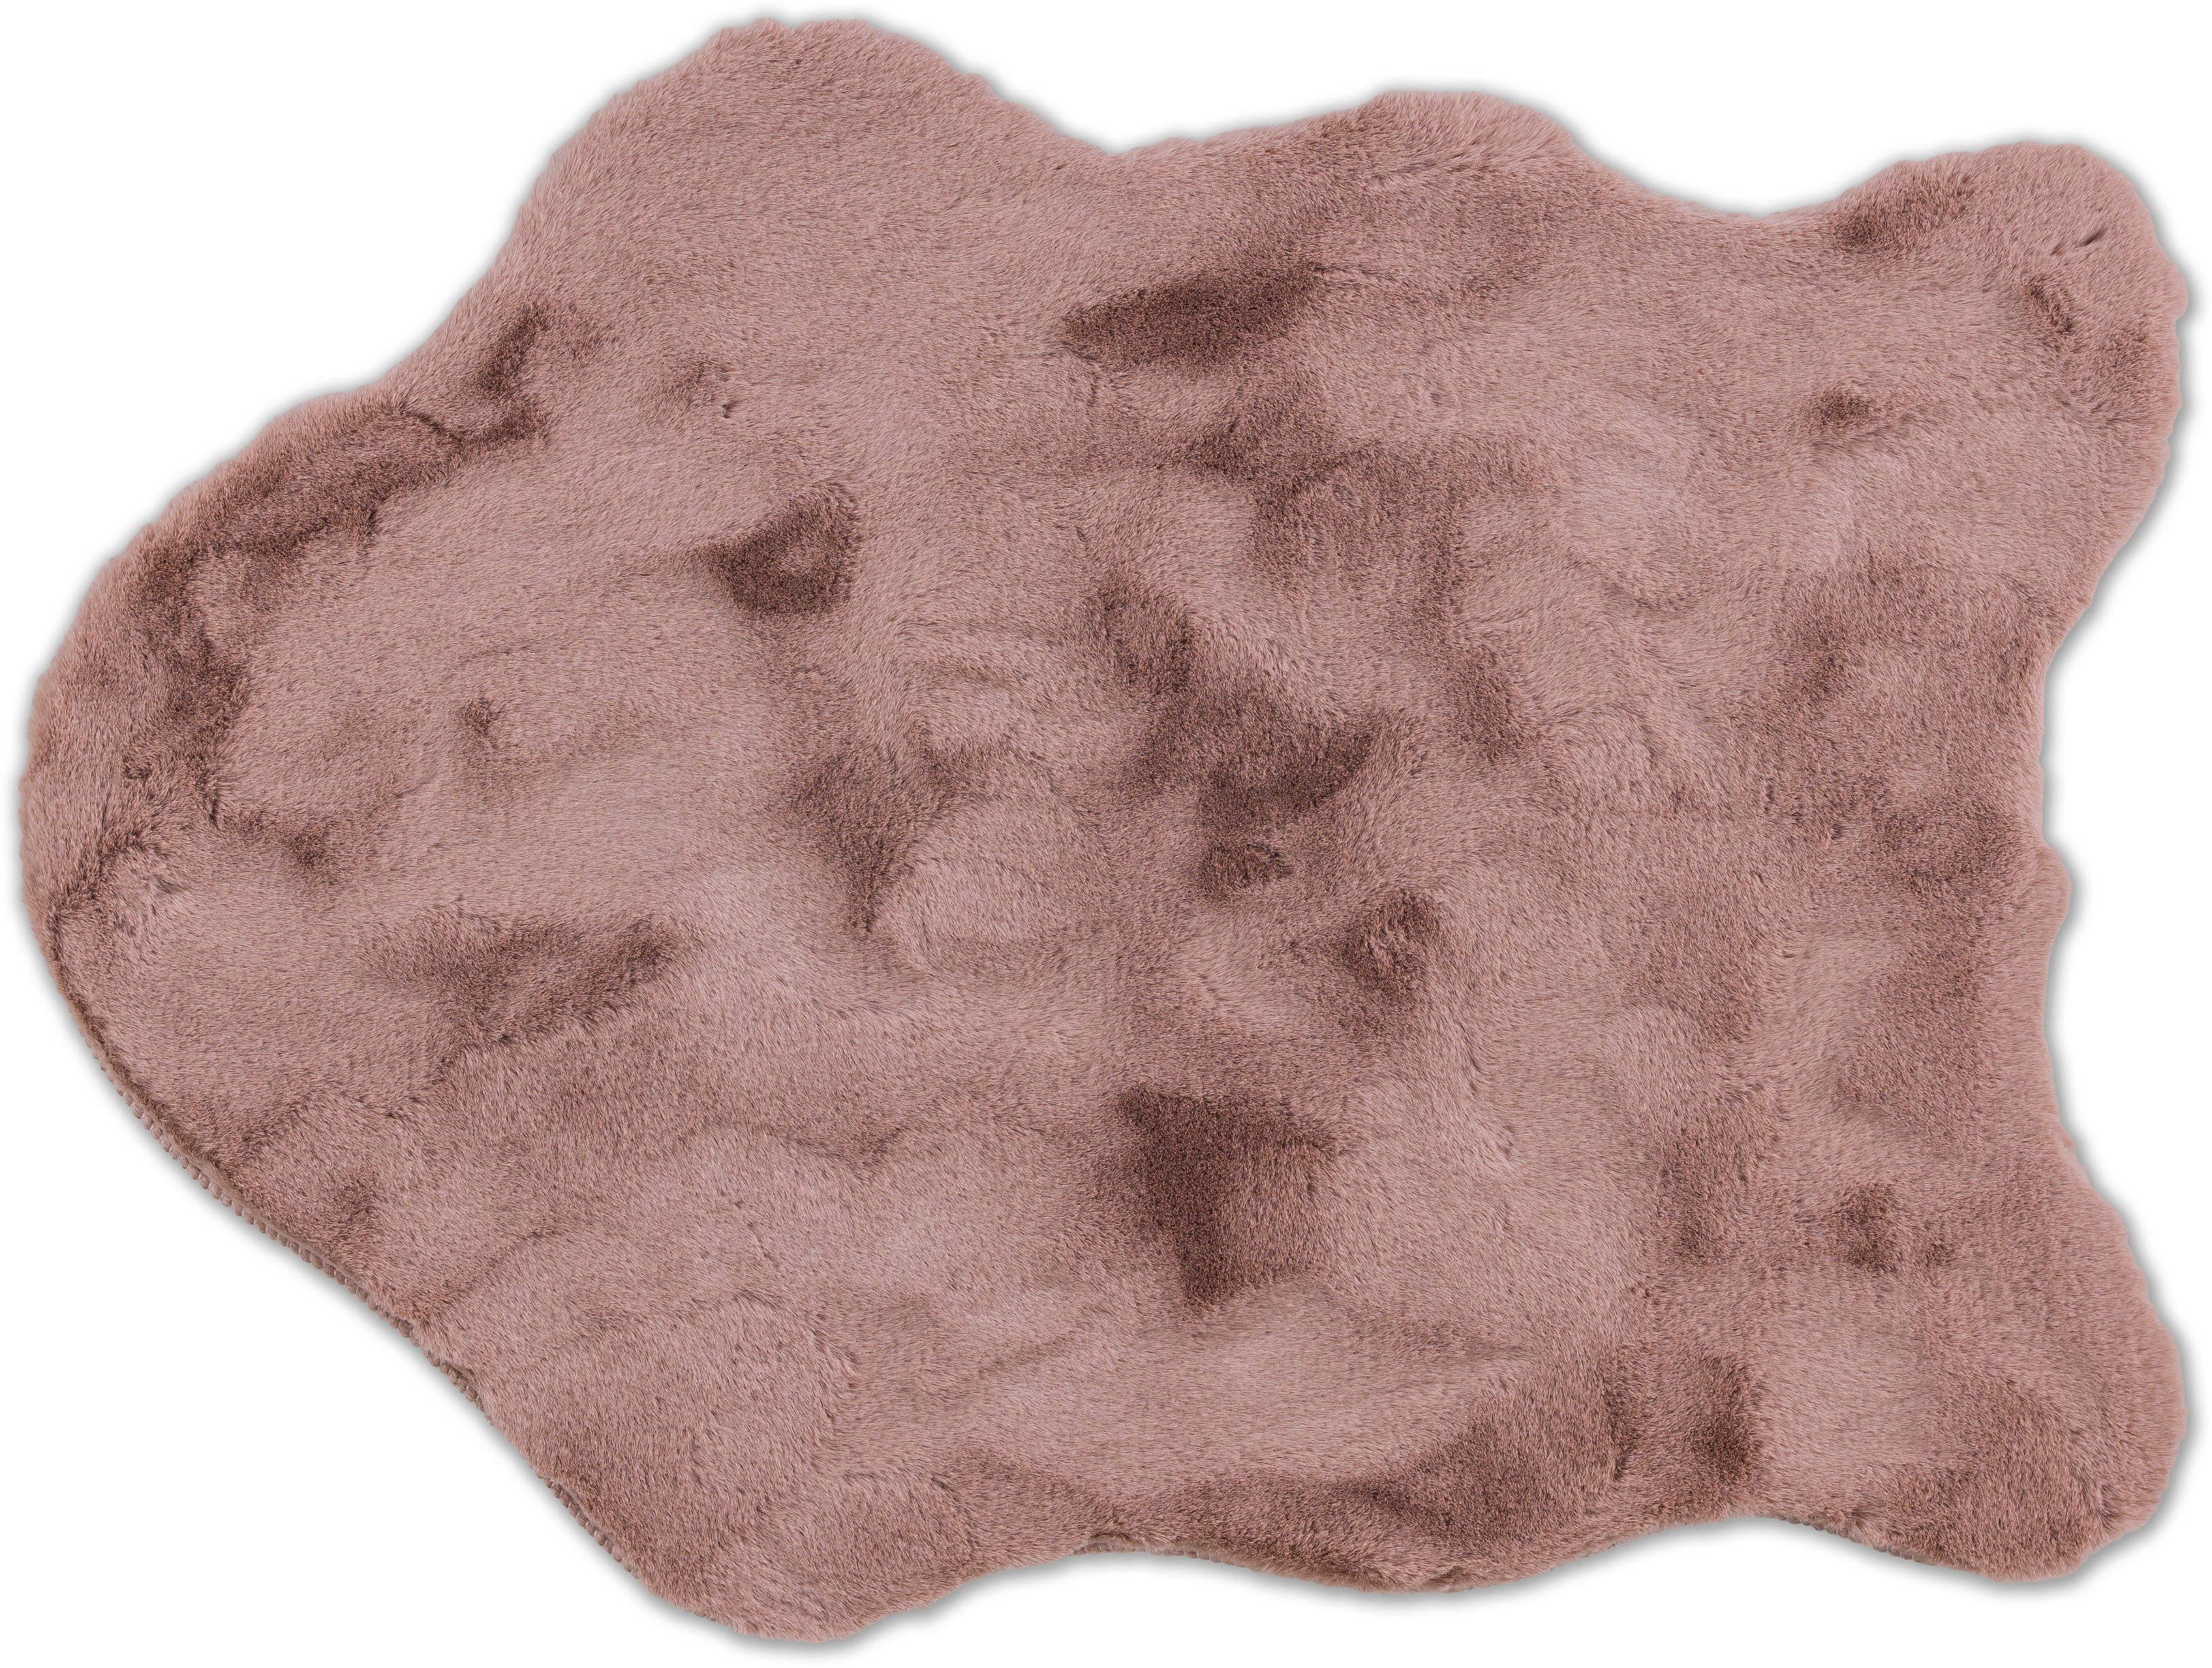 SCHÖNER Kaninchenfell Fellteppich Microfaser, Haptik, waschbar weich Kunstfell, WOHNEN-Kollektion, mm, 26 Tender, fellförmig, Höhe: altrosa durch